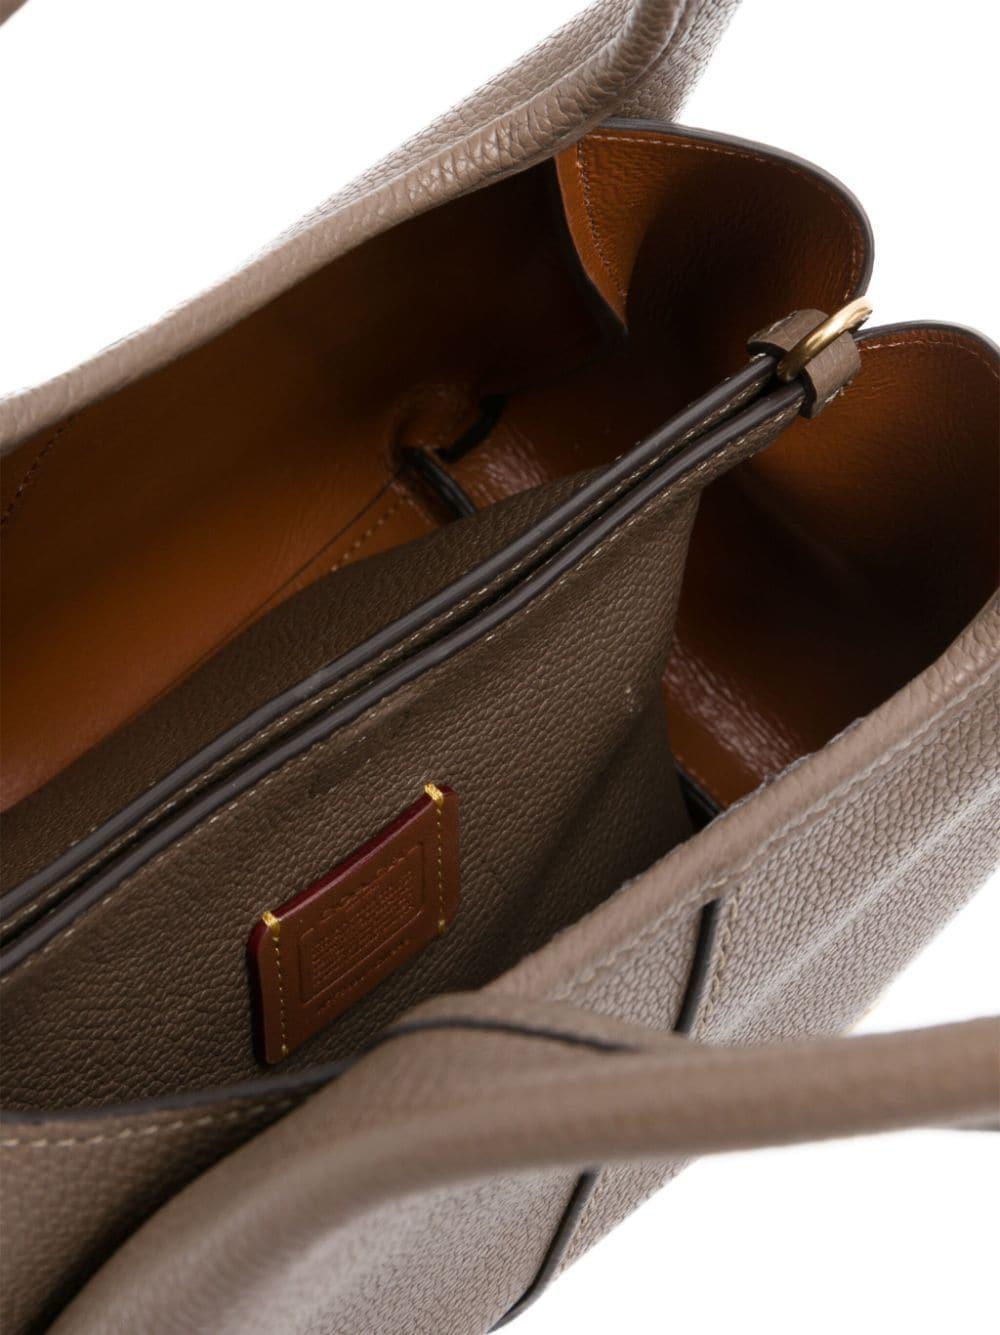 Coach Polished Pebble Leather Lana Shoulder Bag, Dark Stone: Handbags